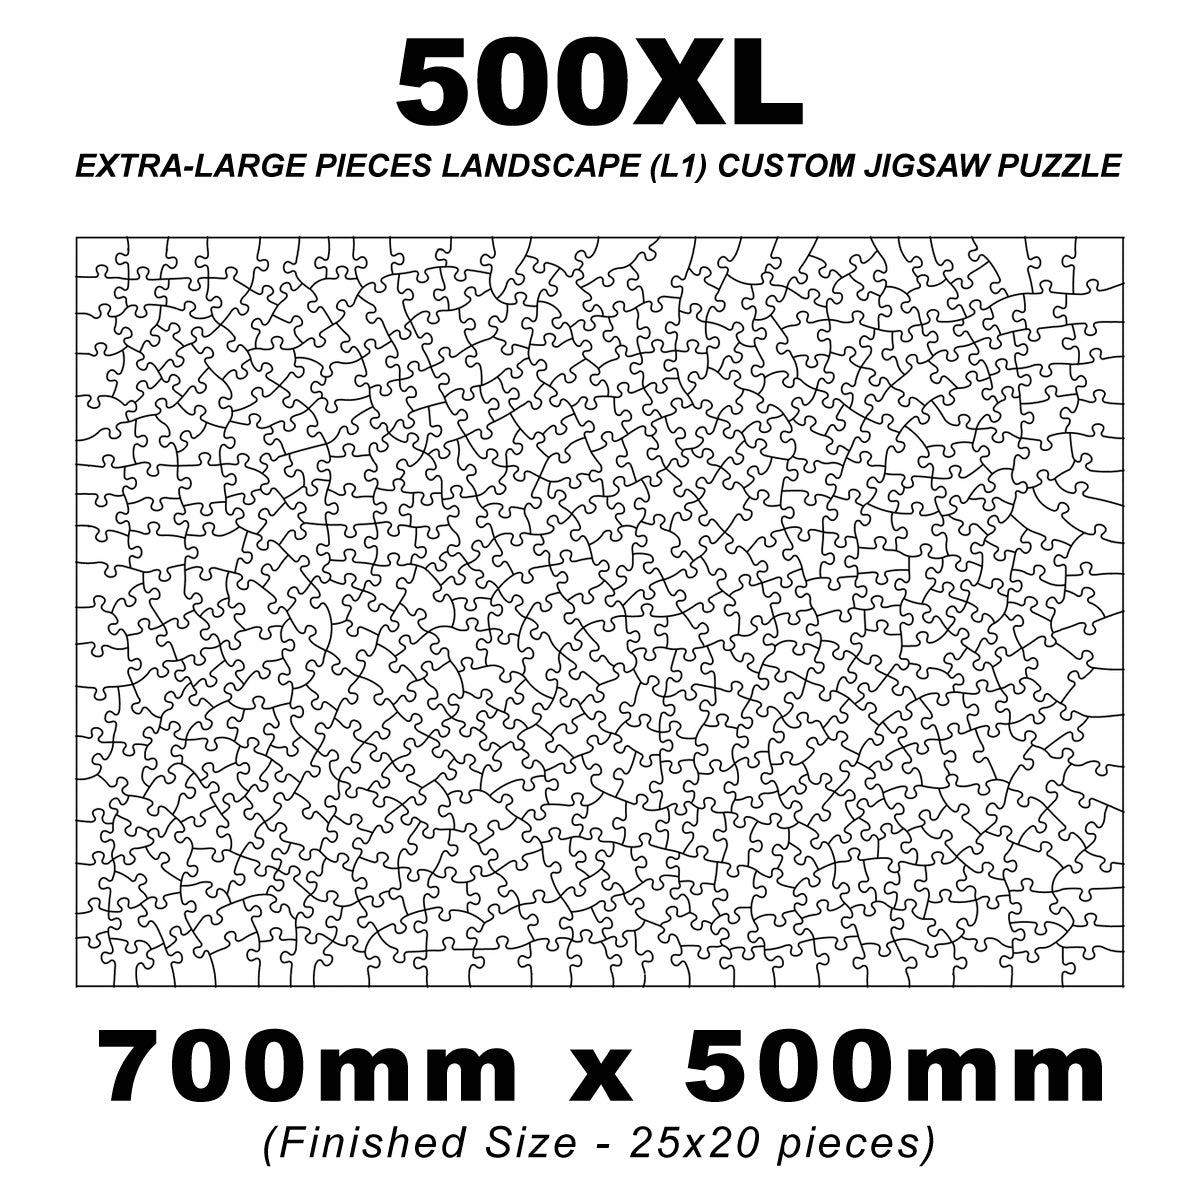 500XL Landscape Extra-Large Pieces (7:5) Custom Jigsaw 700 x 500mm